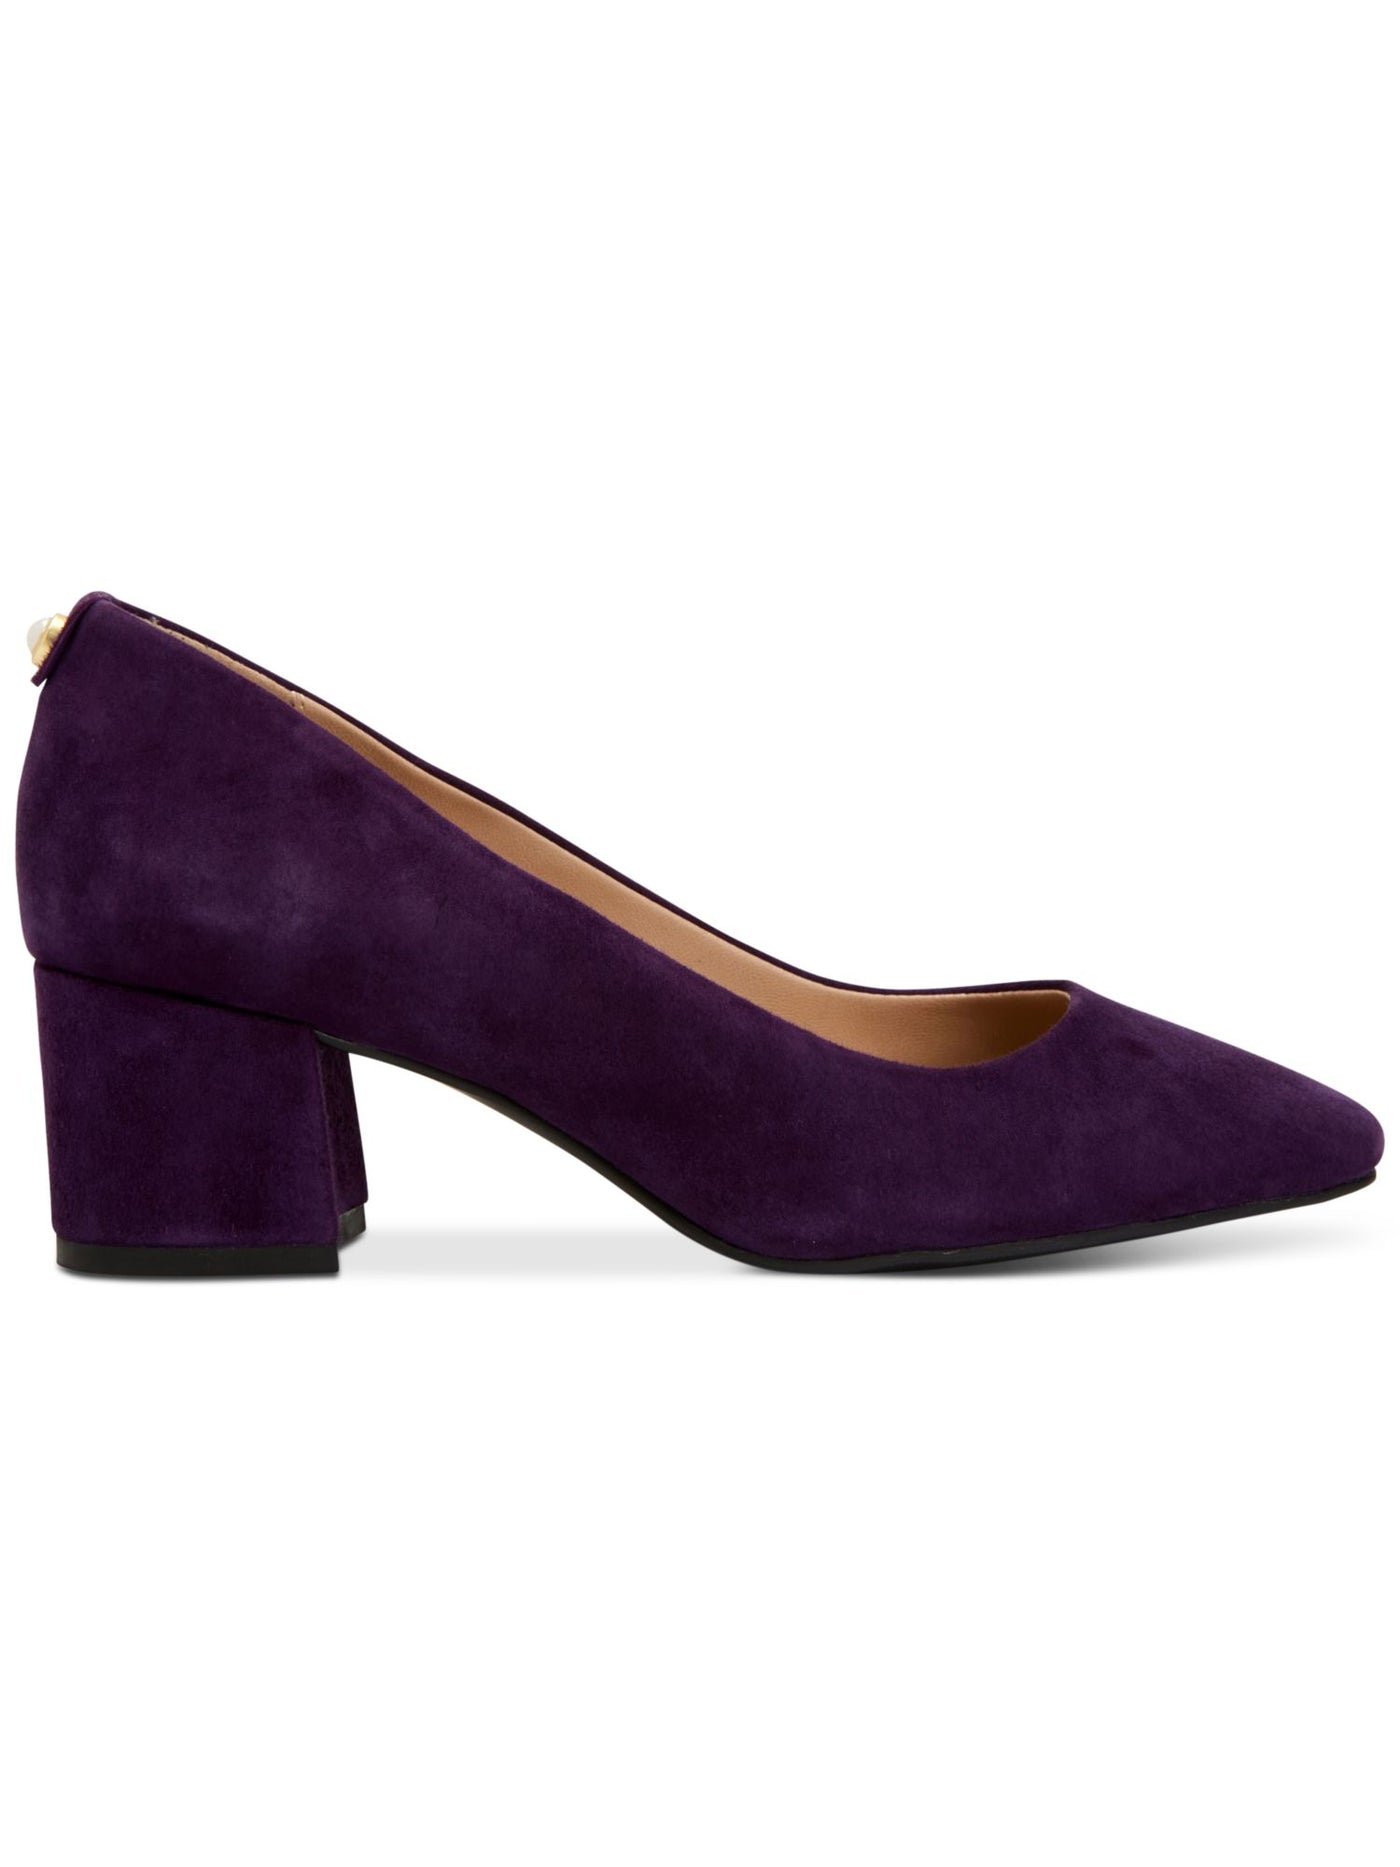 CHARTER CLUB Womens Plum Purple Padded Slip Resistant Saraa Square Toe Block Heel Slip On Leather Dress Pumps Shoes 6